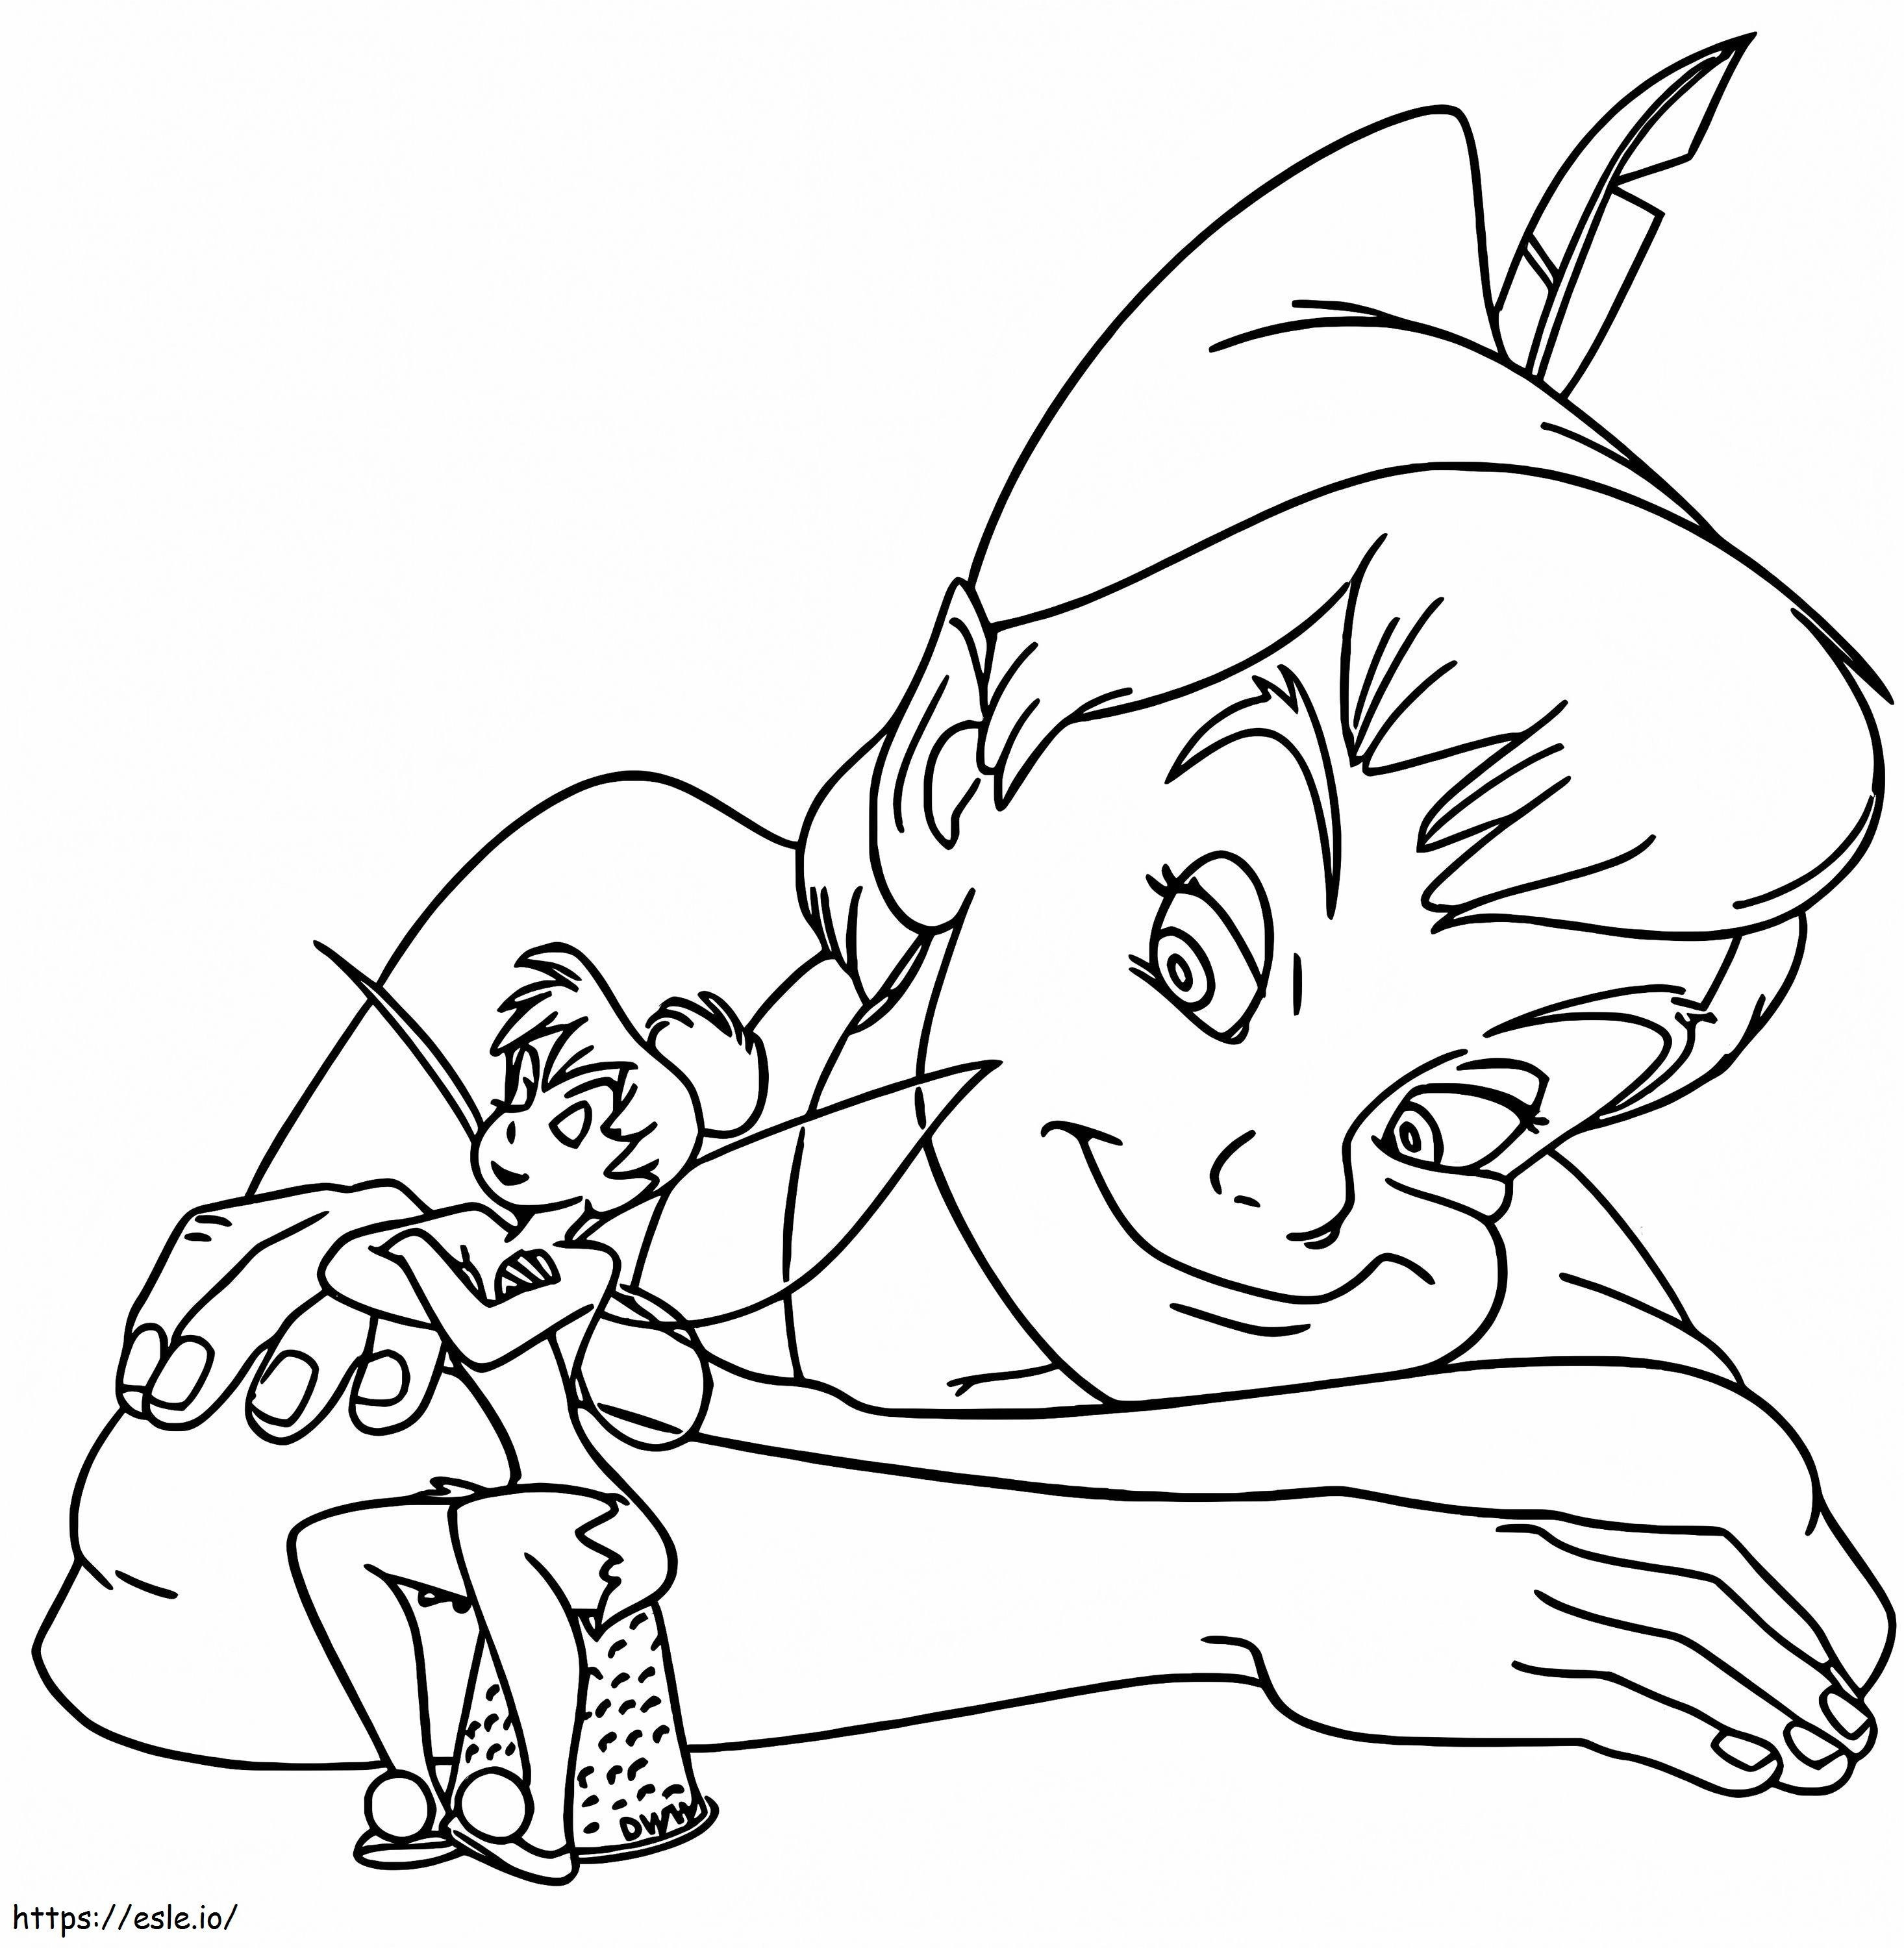 Peter Pan und Tinker Bell ausmalbilder